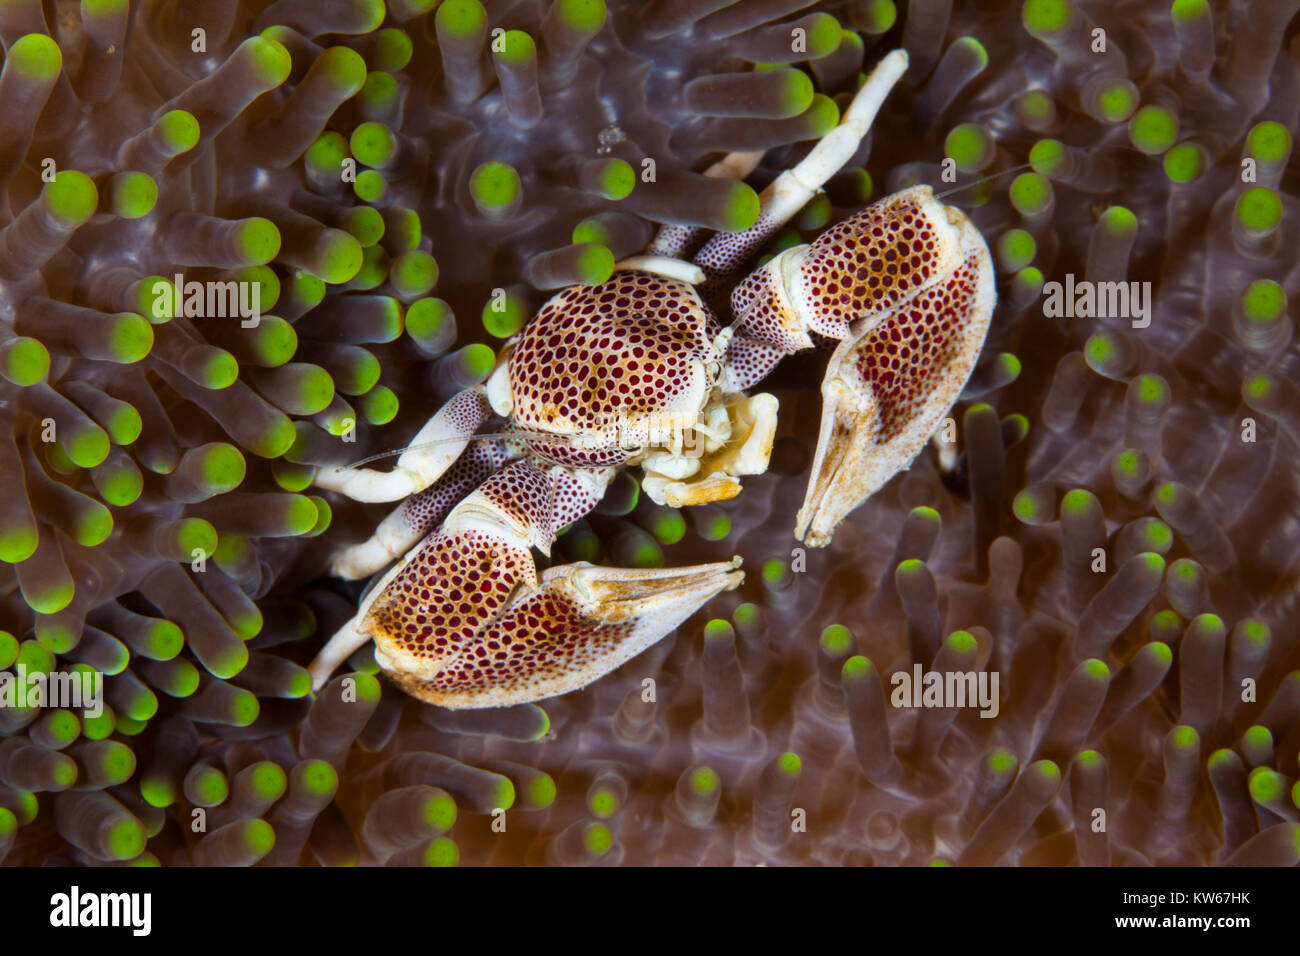 Porcelain Crab (Neopetrolisthes maculatus) on a Sea Anemone Stock Photo